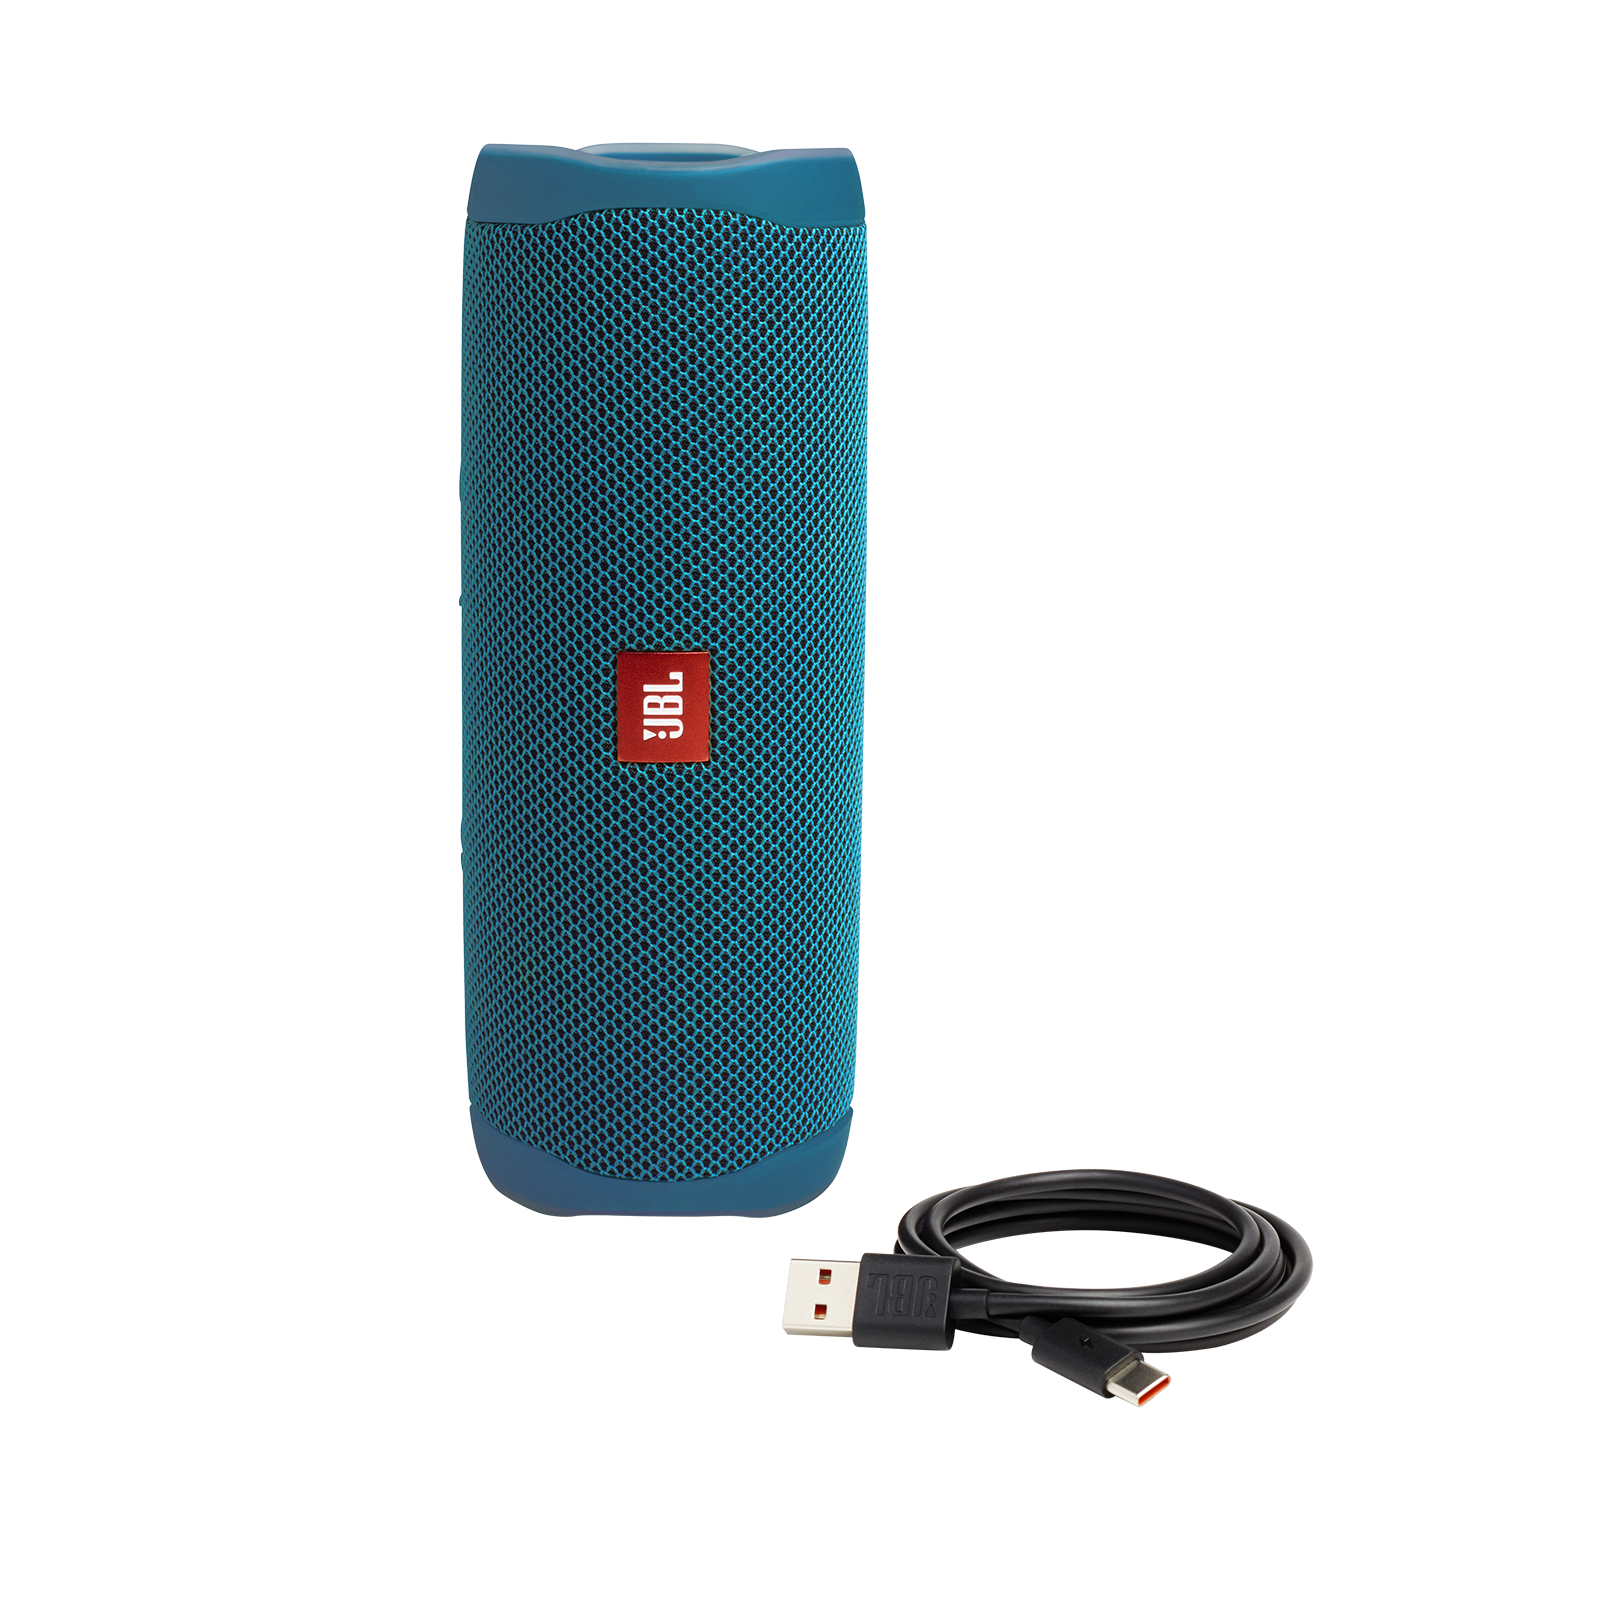 JBL Flip 5 Eco edition - Ocean Blue - Portable Speaker - Eco edition - Detailshot 2